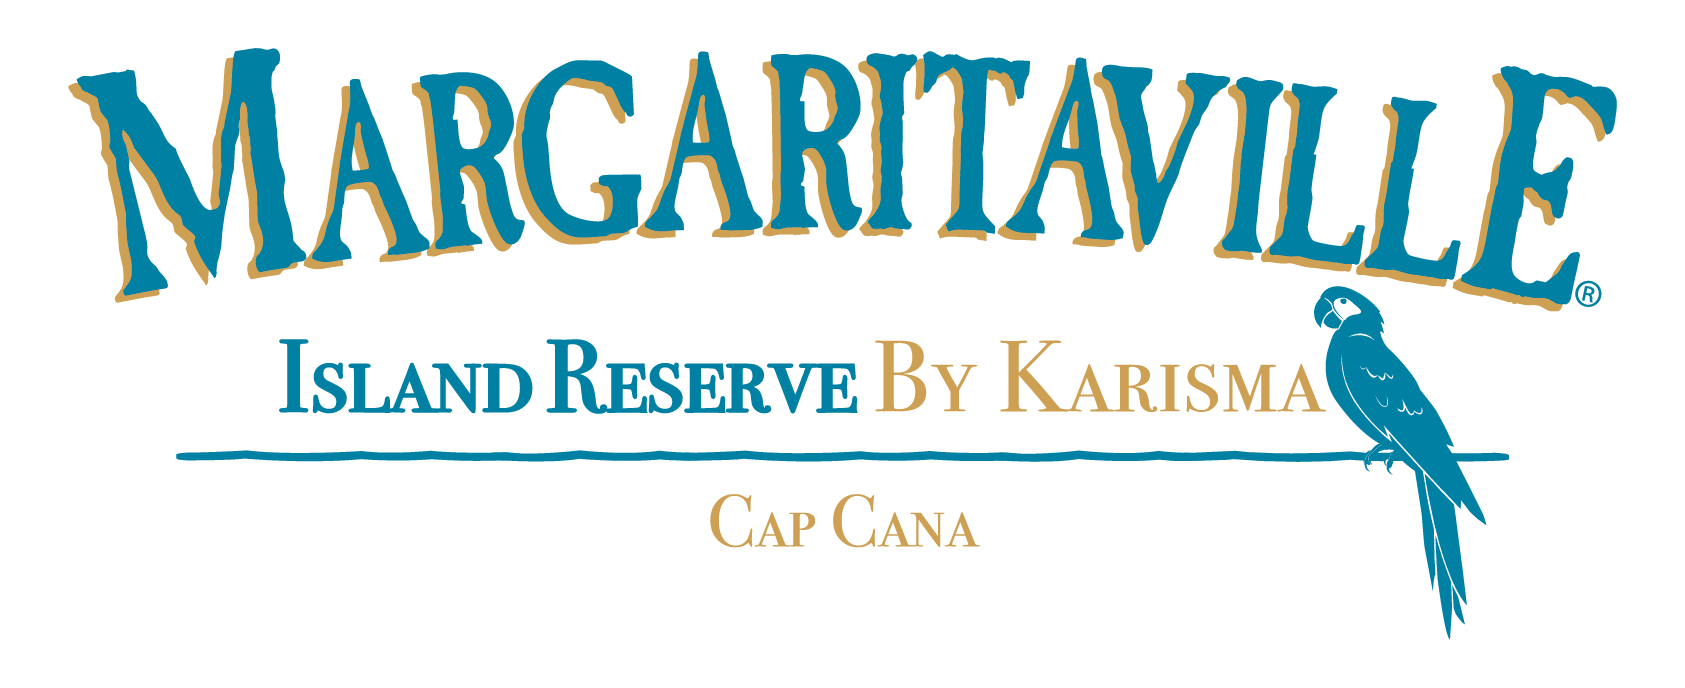 Margaritaville Island Reserve Cap Cana